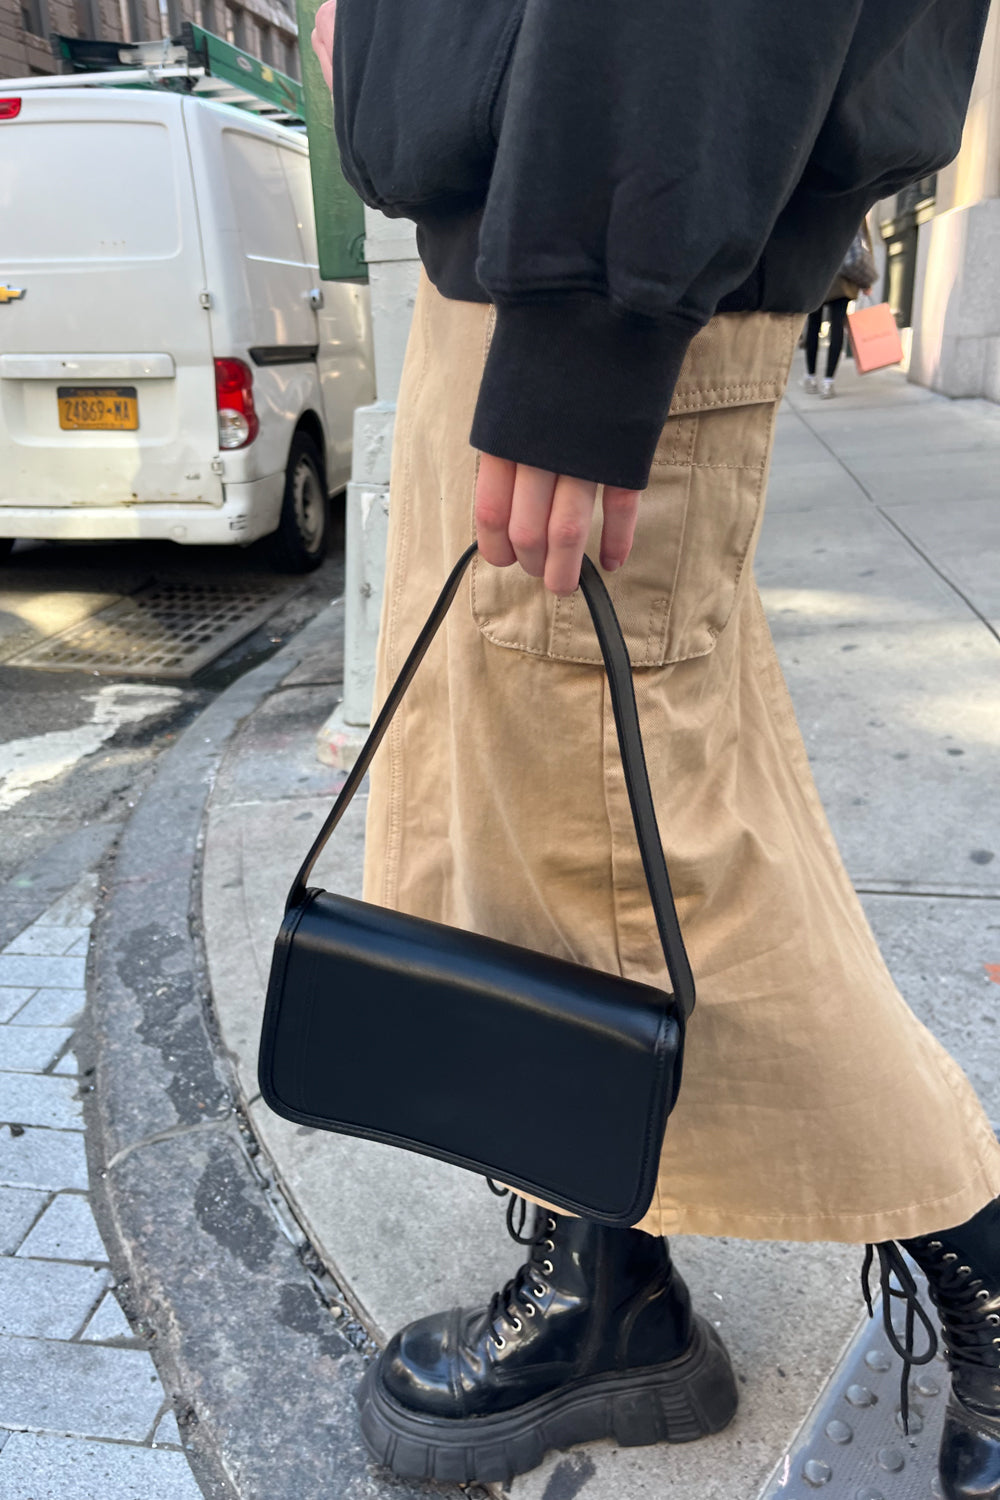 Brandy Melville bag black